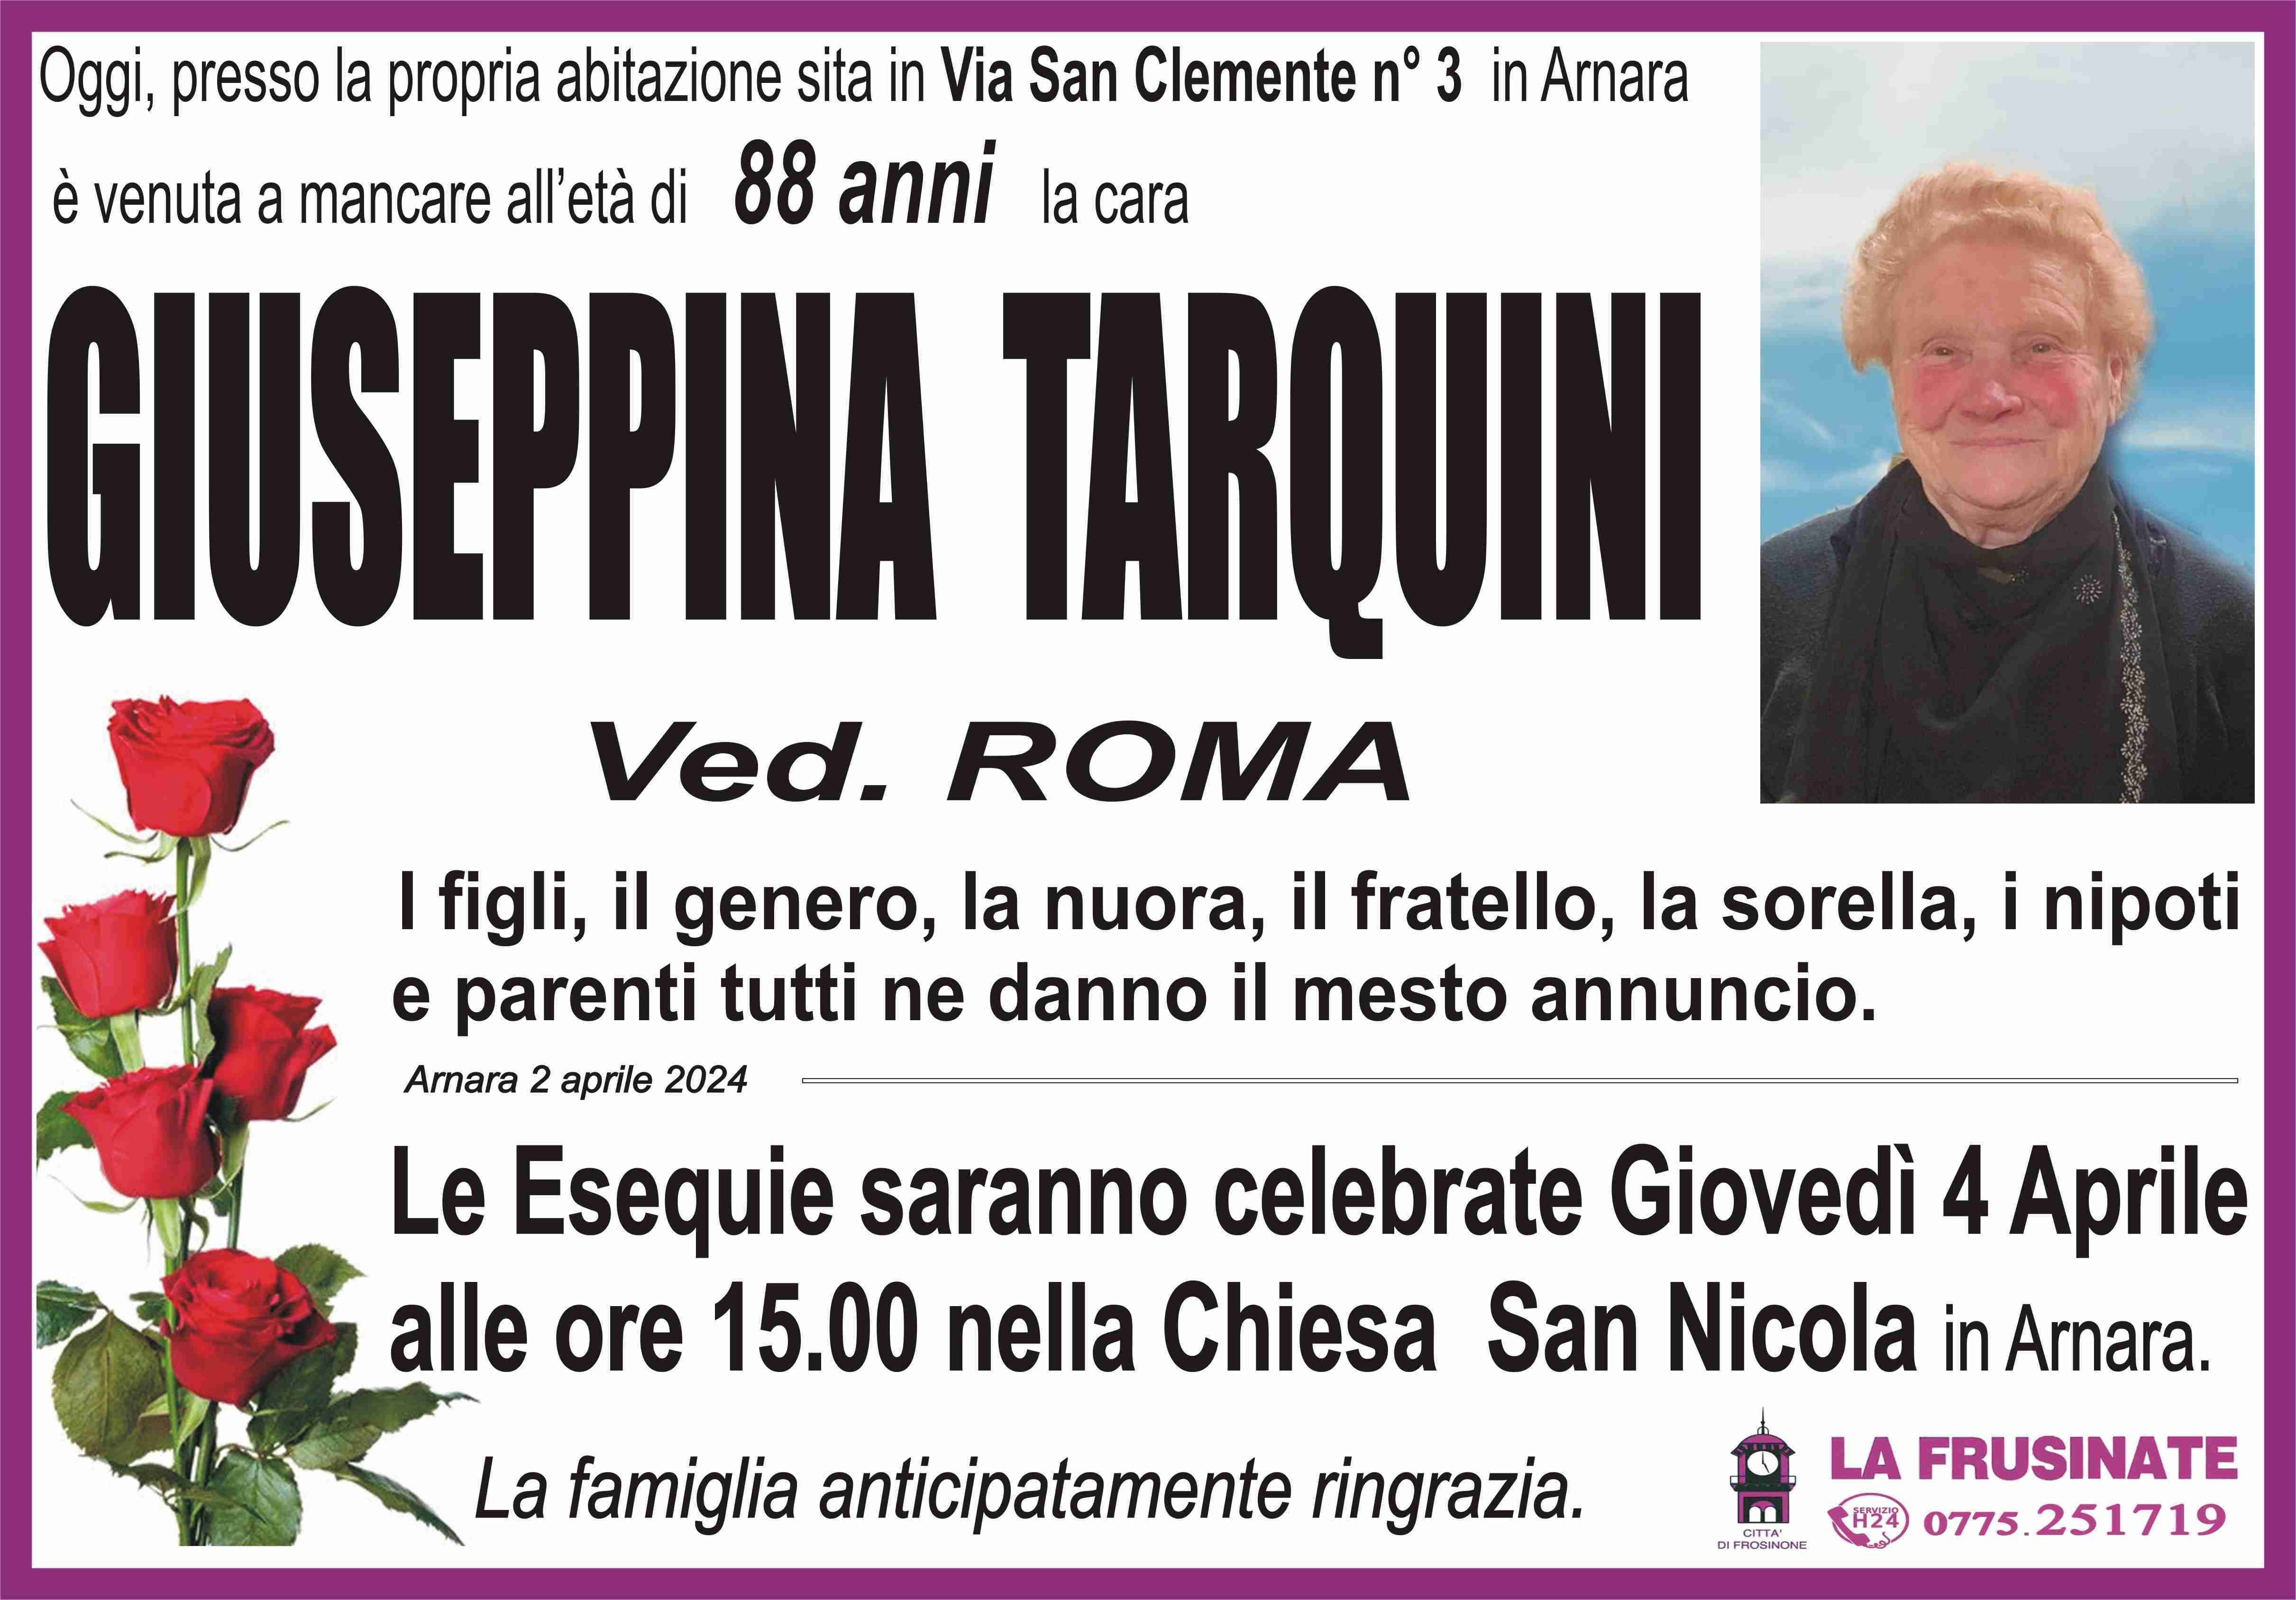 Giuseppina Tarquini